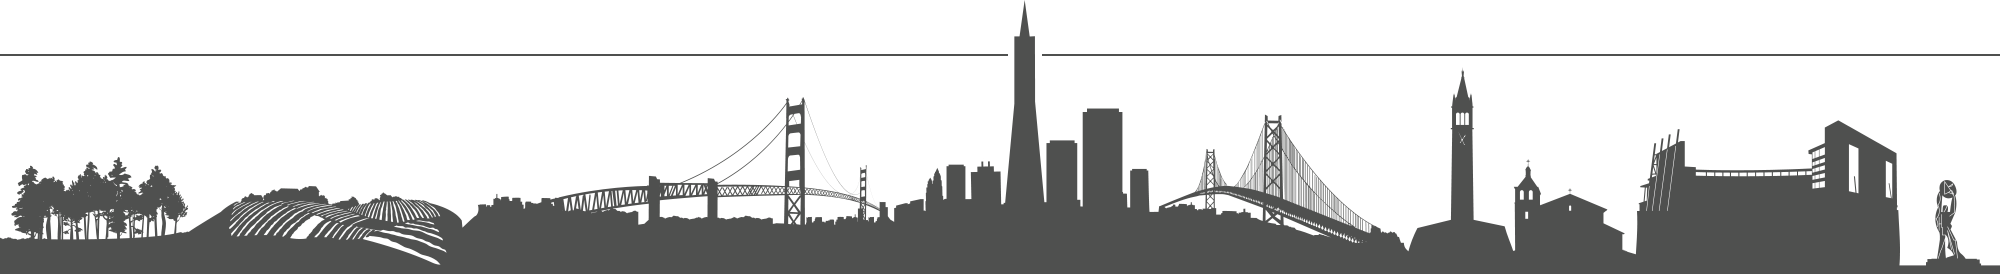 San Francisco Skyline Logo - Super Bowl City presented by Verizon Bowl 50